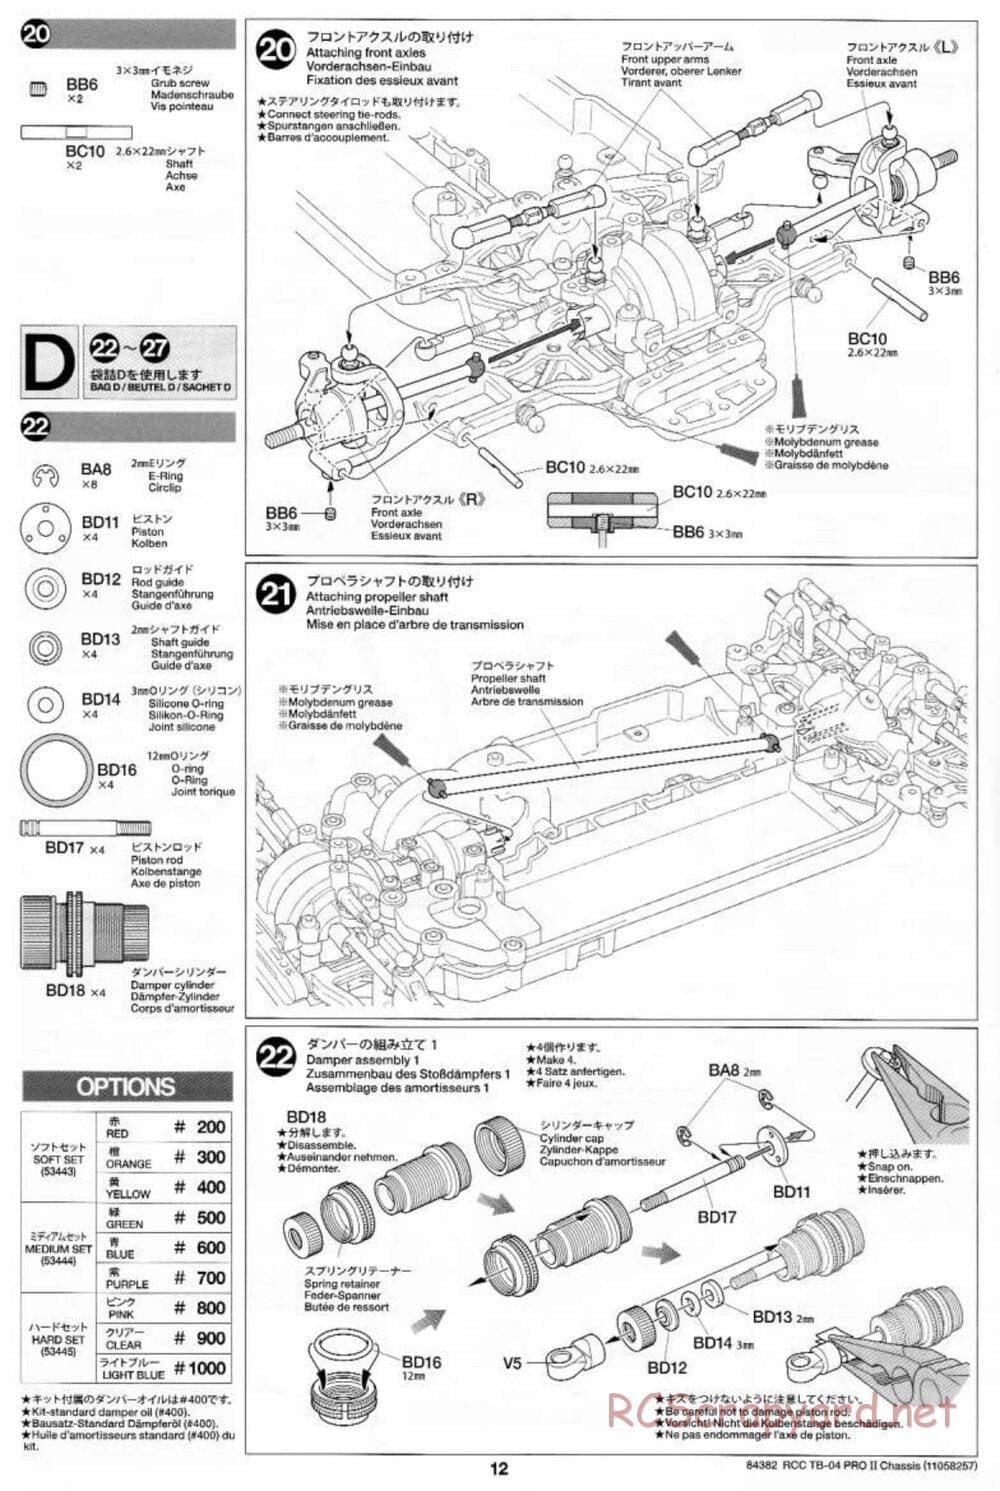 Tamiya - TB-04 Pro II Chassis - Manual - Page 12